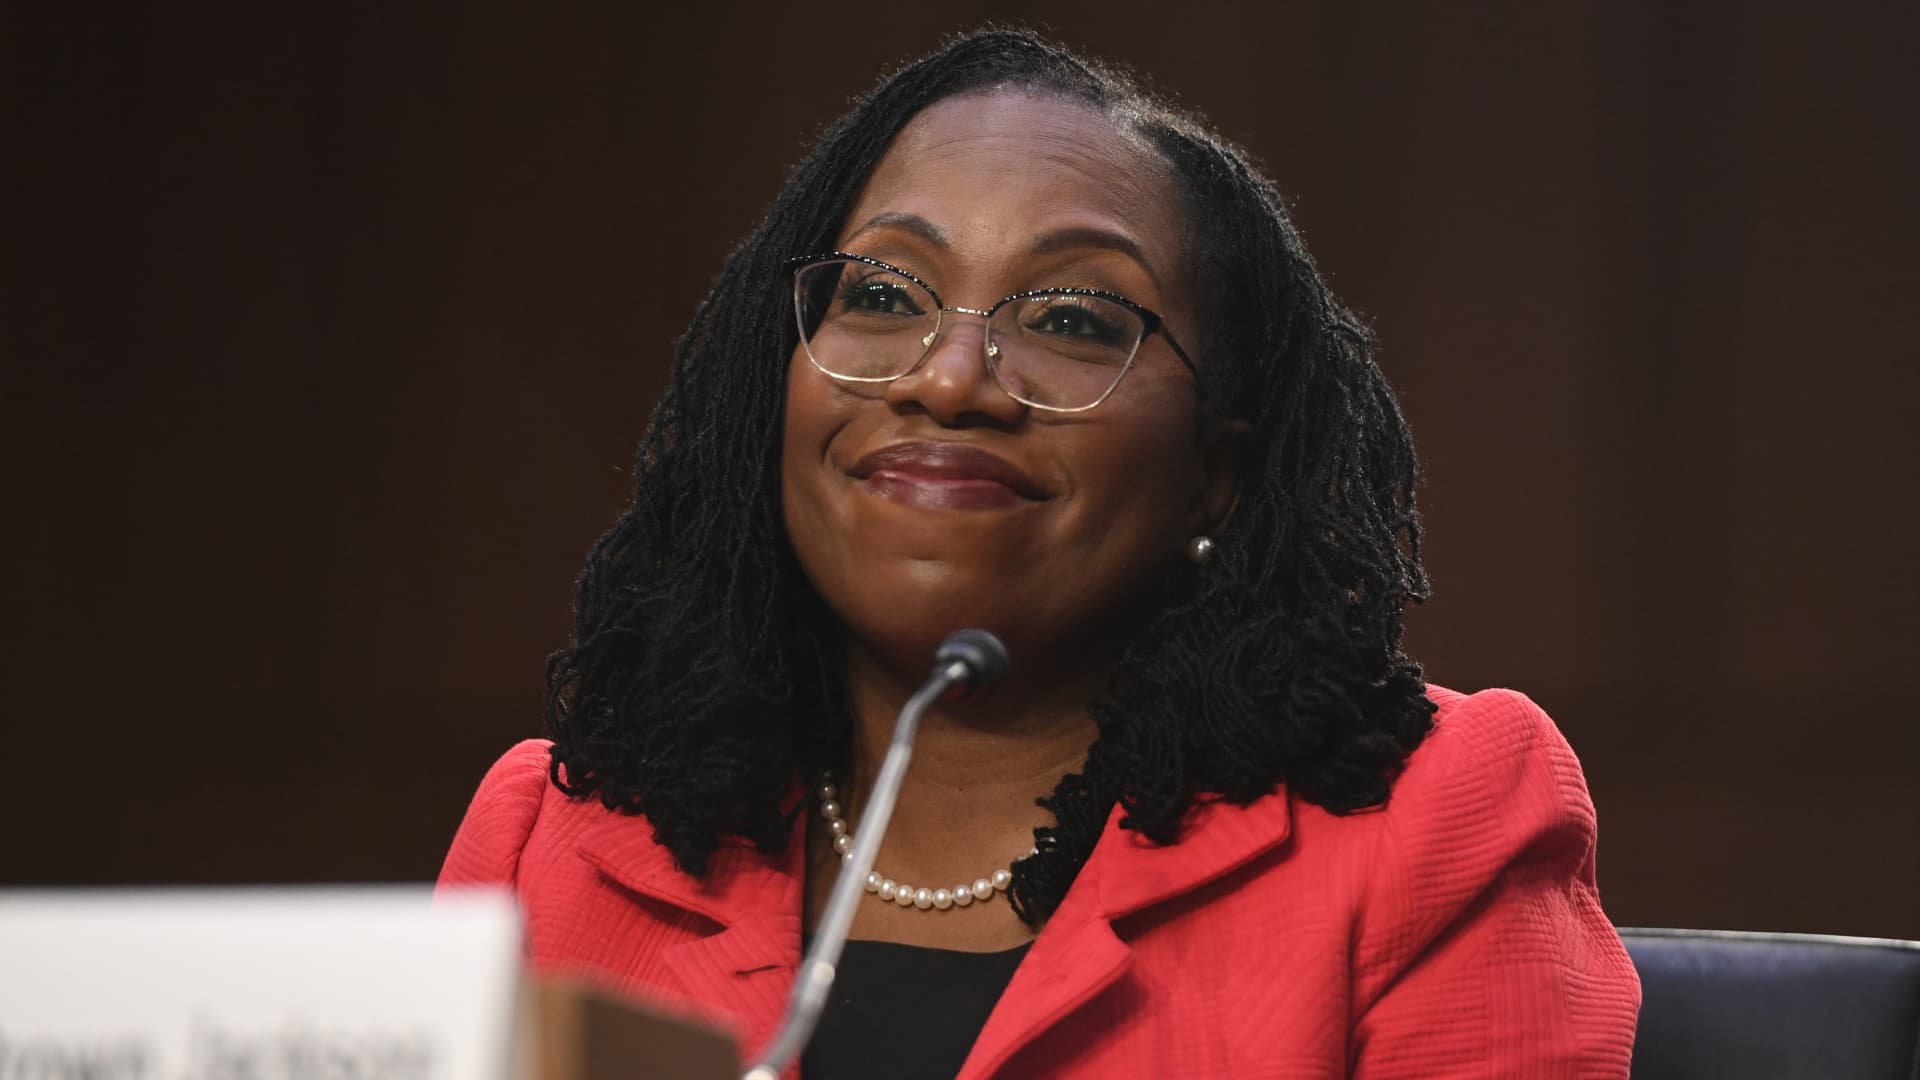 Judge Ketanji Brown Jackson confirmed to become the first Black woman U.S. Supre..